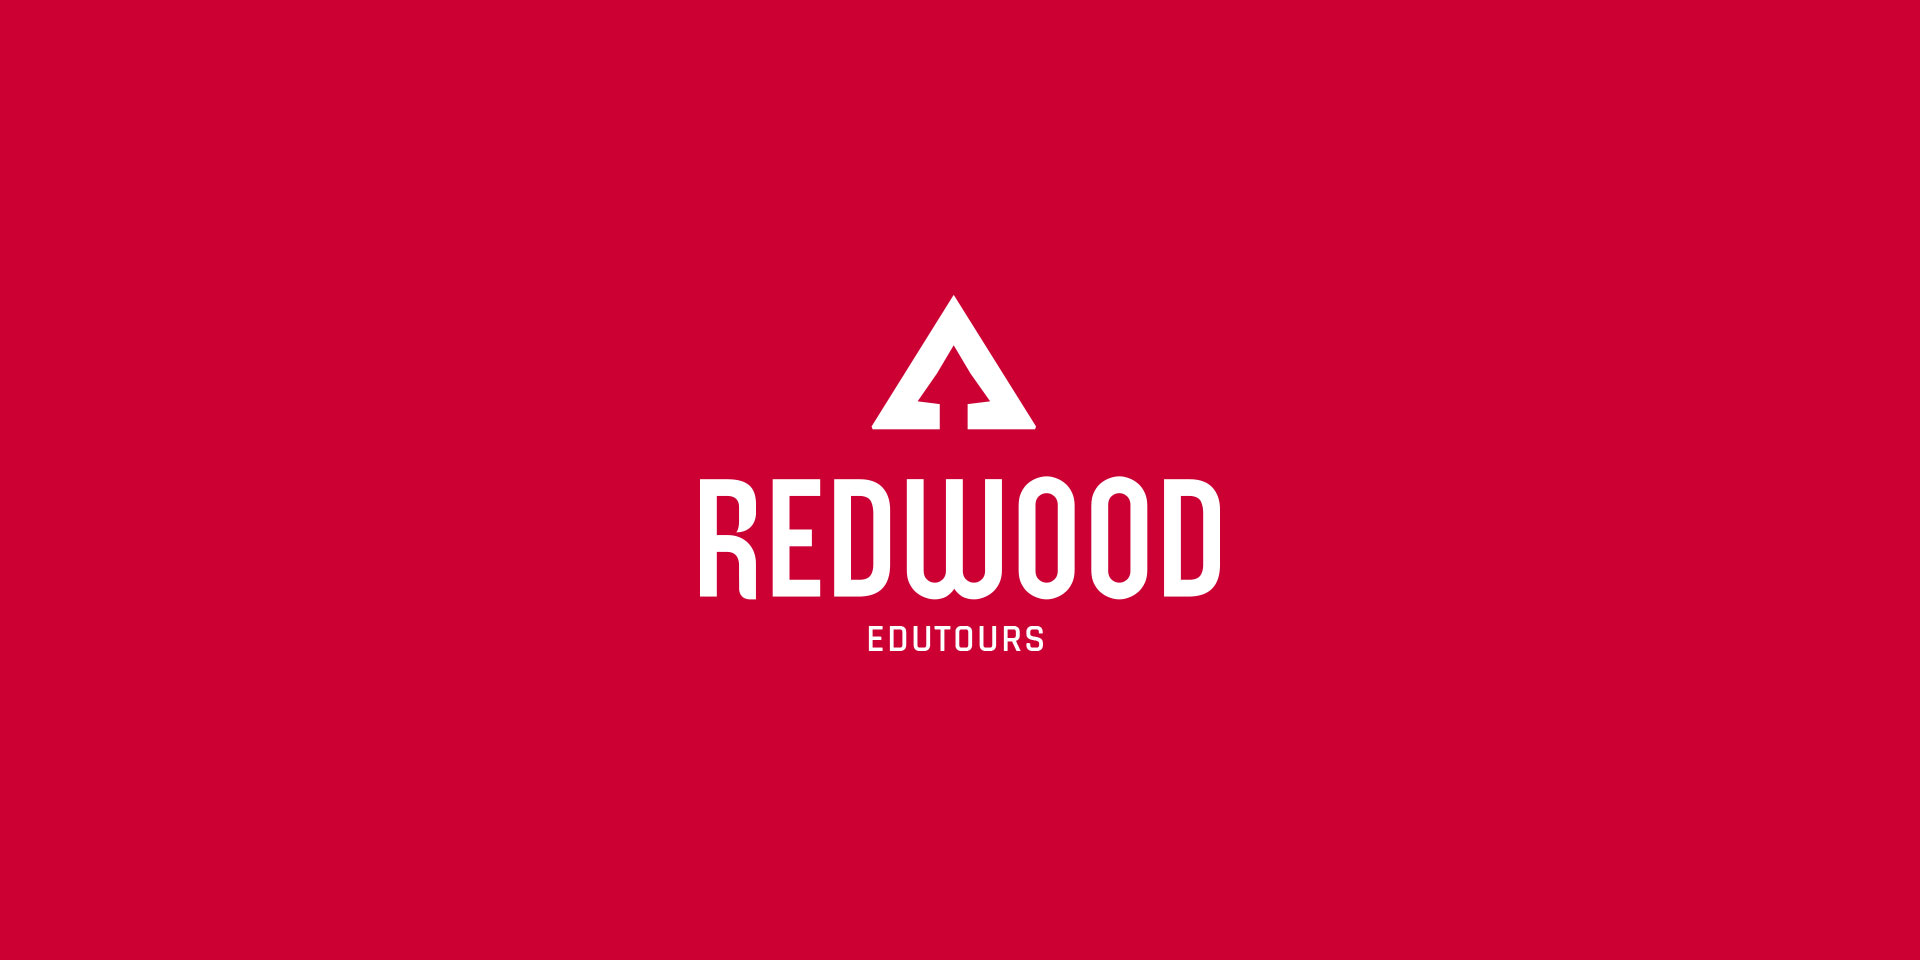 Red Wood - Identity Design 4